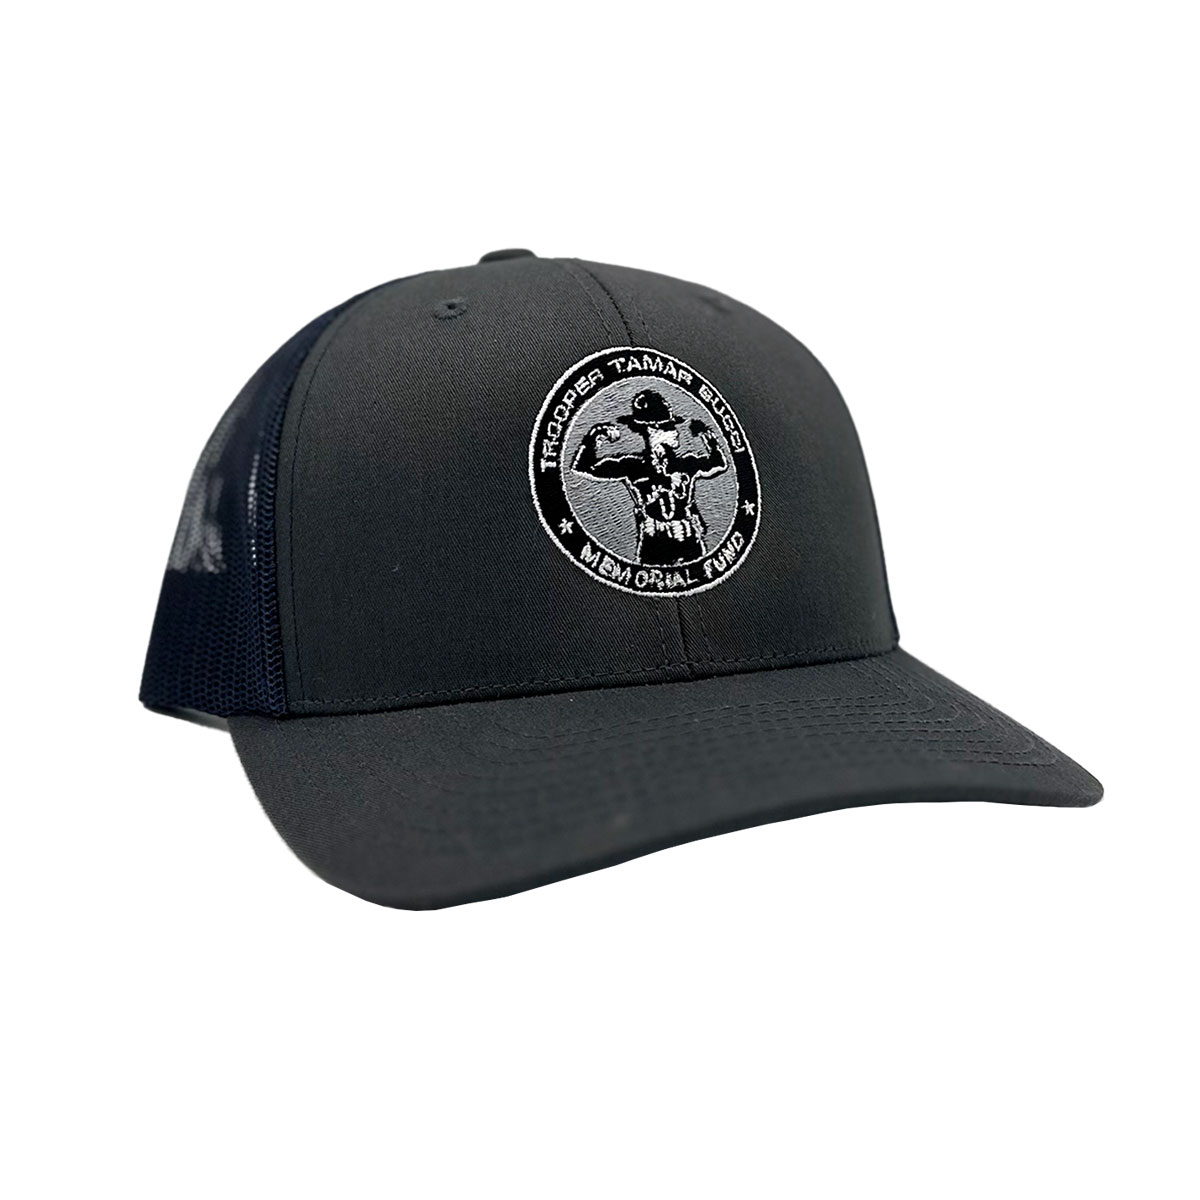 Flex Trucker Hat Blue and Gray - Trooper Tamar Bucci Memorial Fund